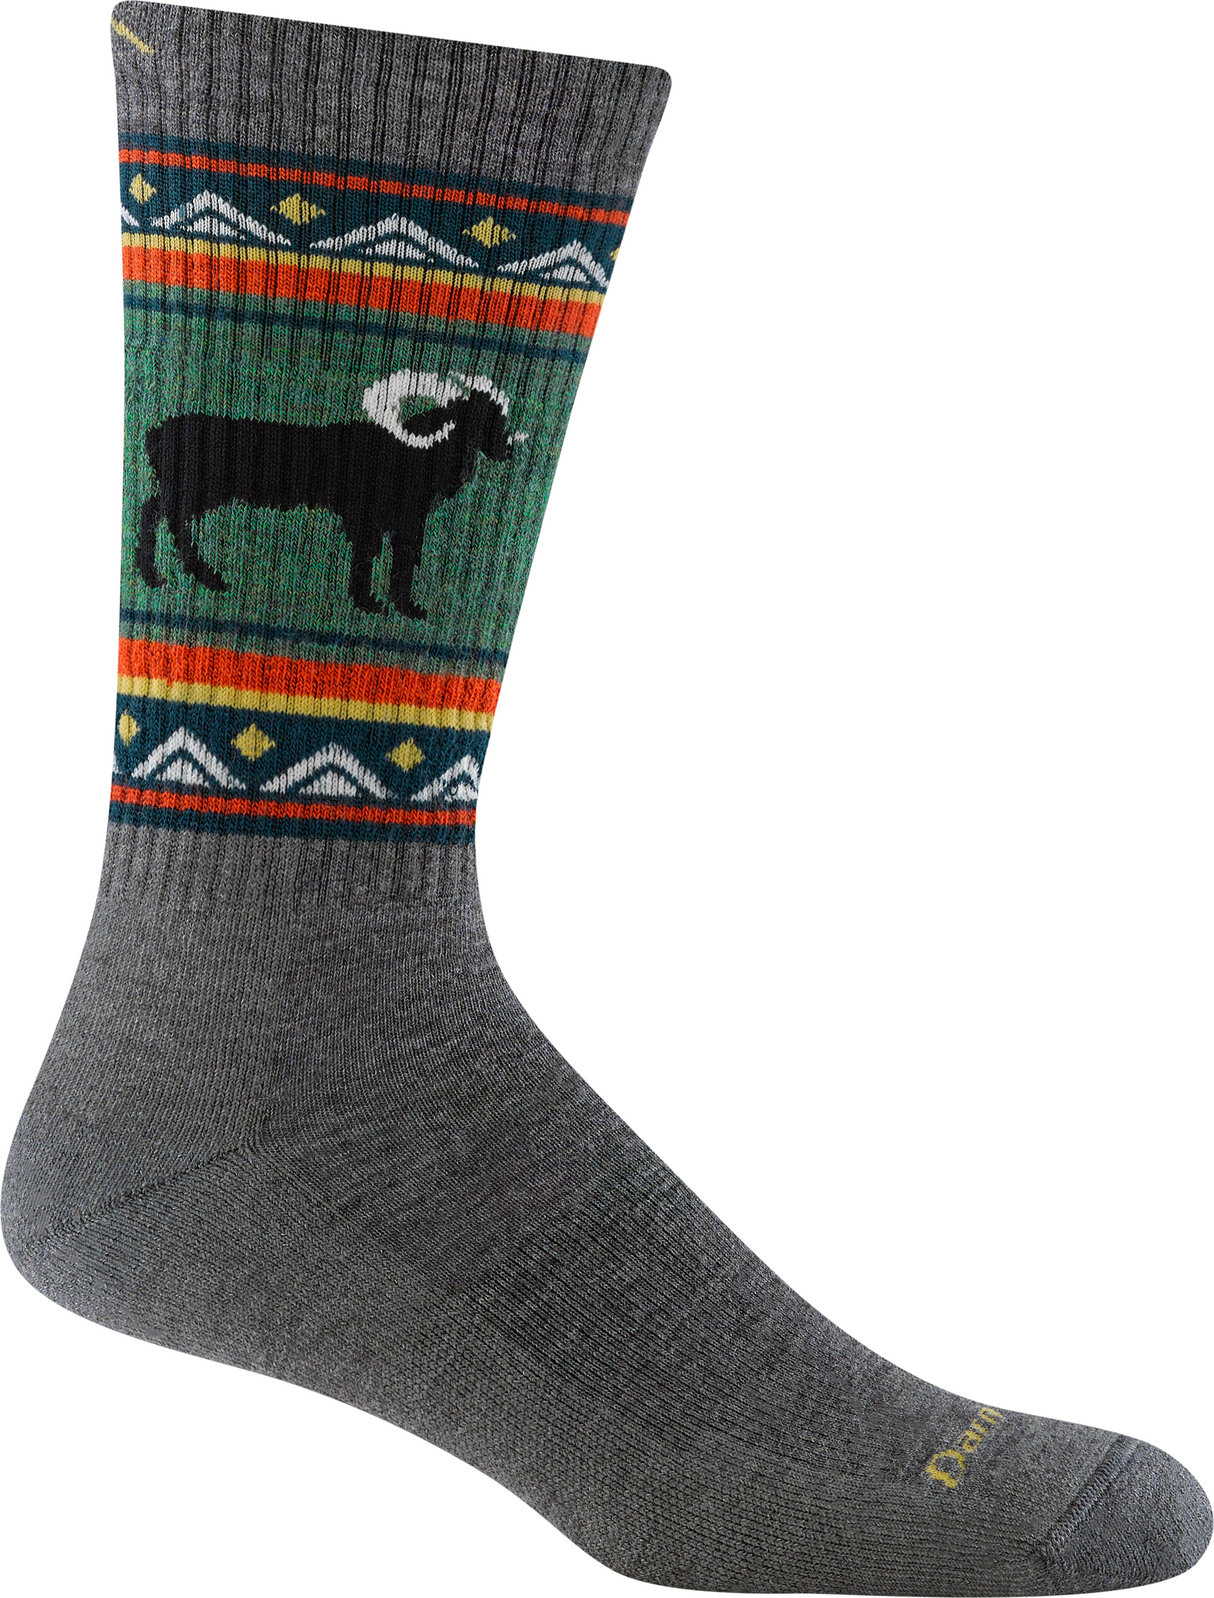 VanGrizzle Ram Midweight Merino Wool Boot Sock (Grey), Darn Tough